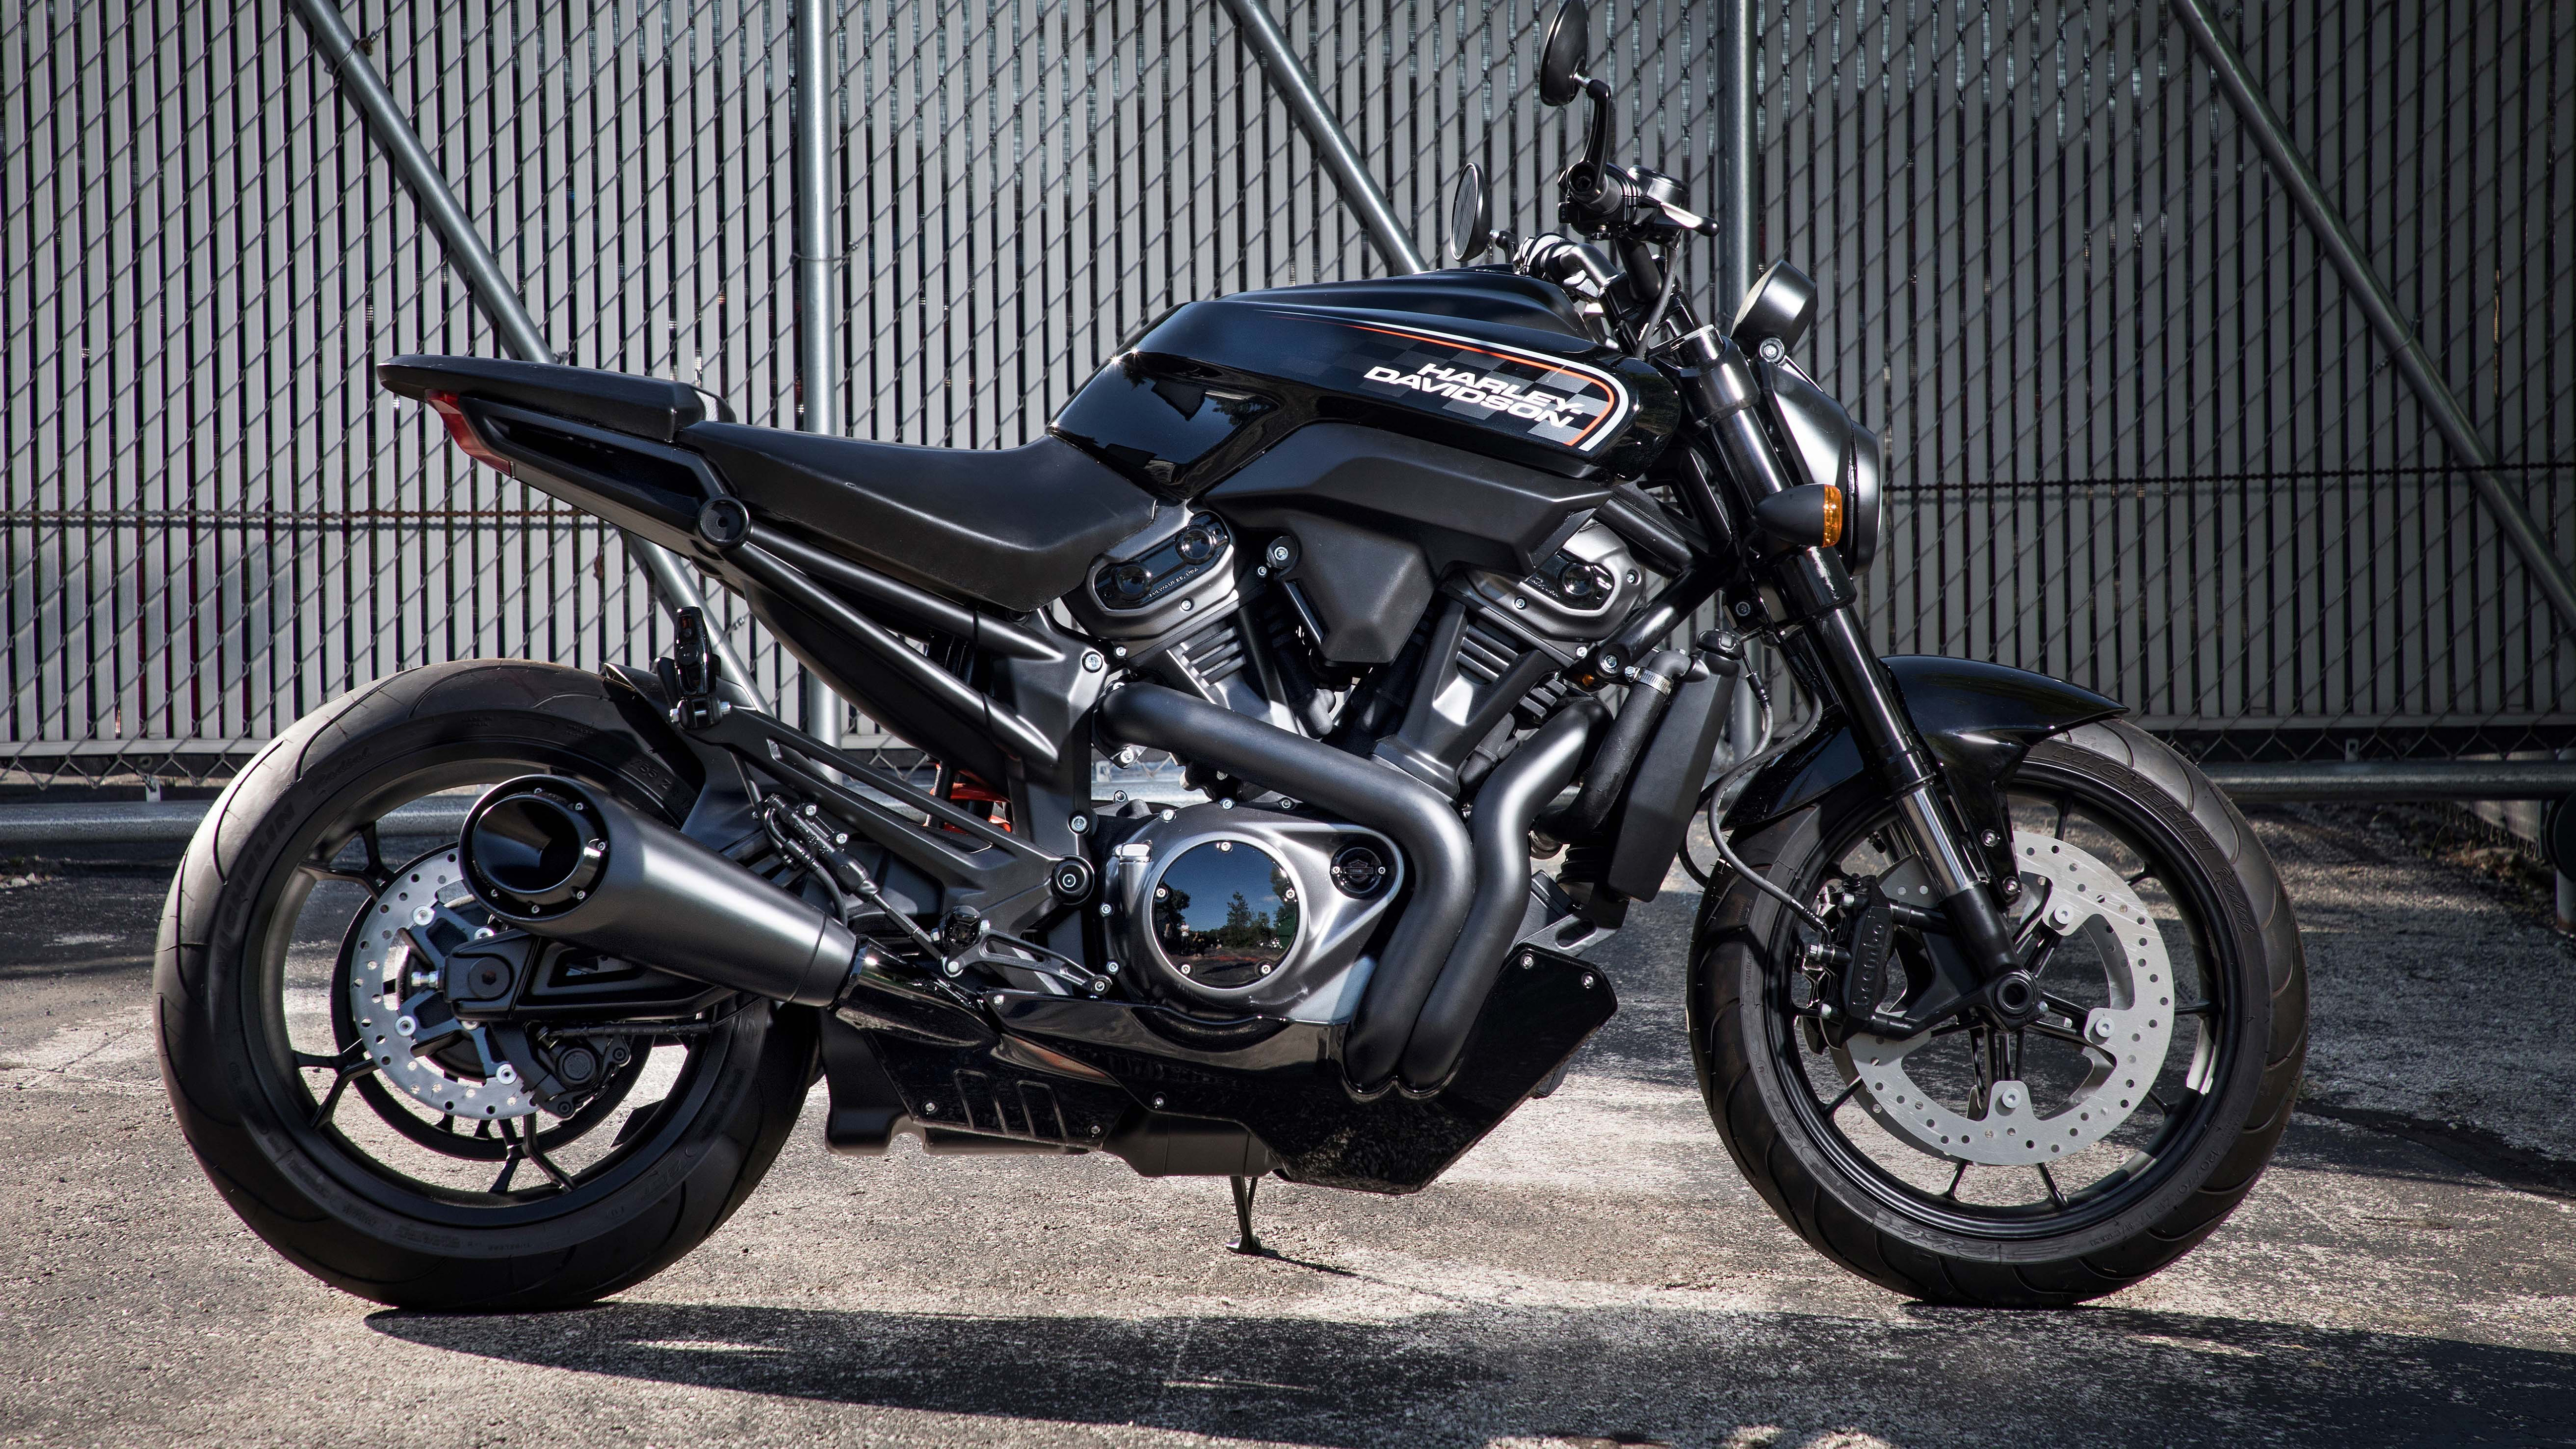 2020 Harley-Davidson Streetfighter 5K